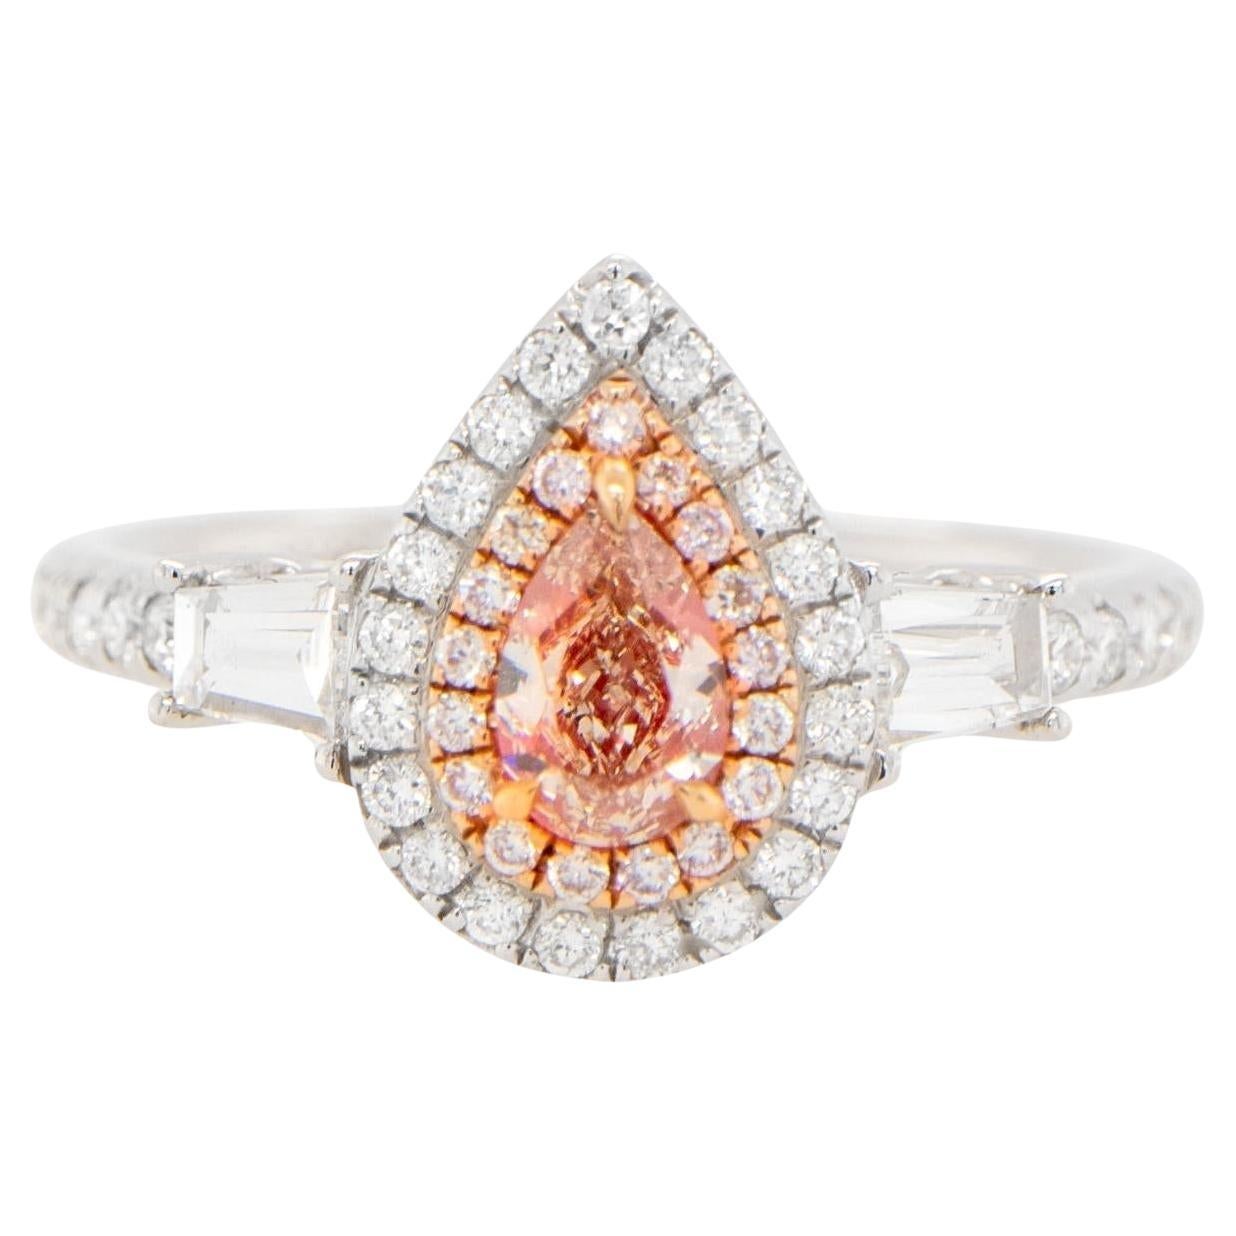 GIA Certified Natural Fancy Pink Diamond Engagement Ring 0.90 Carats 18K